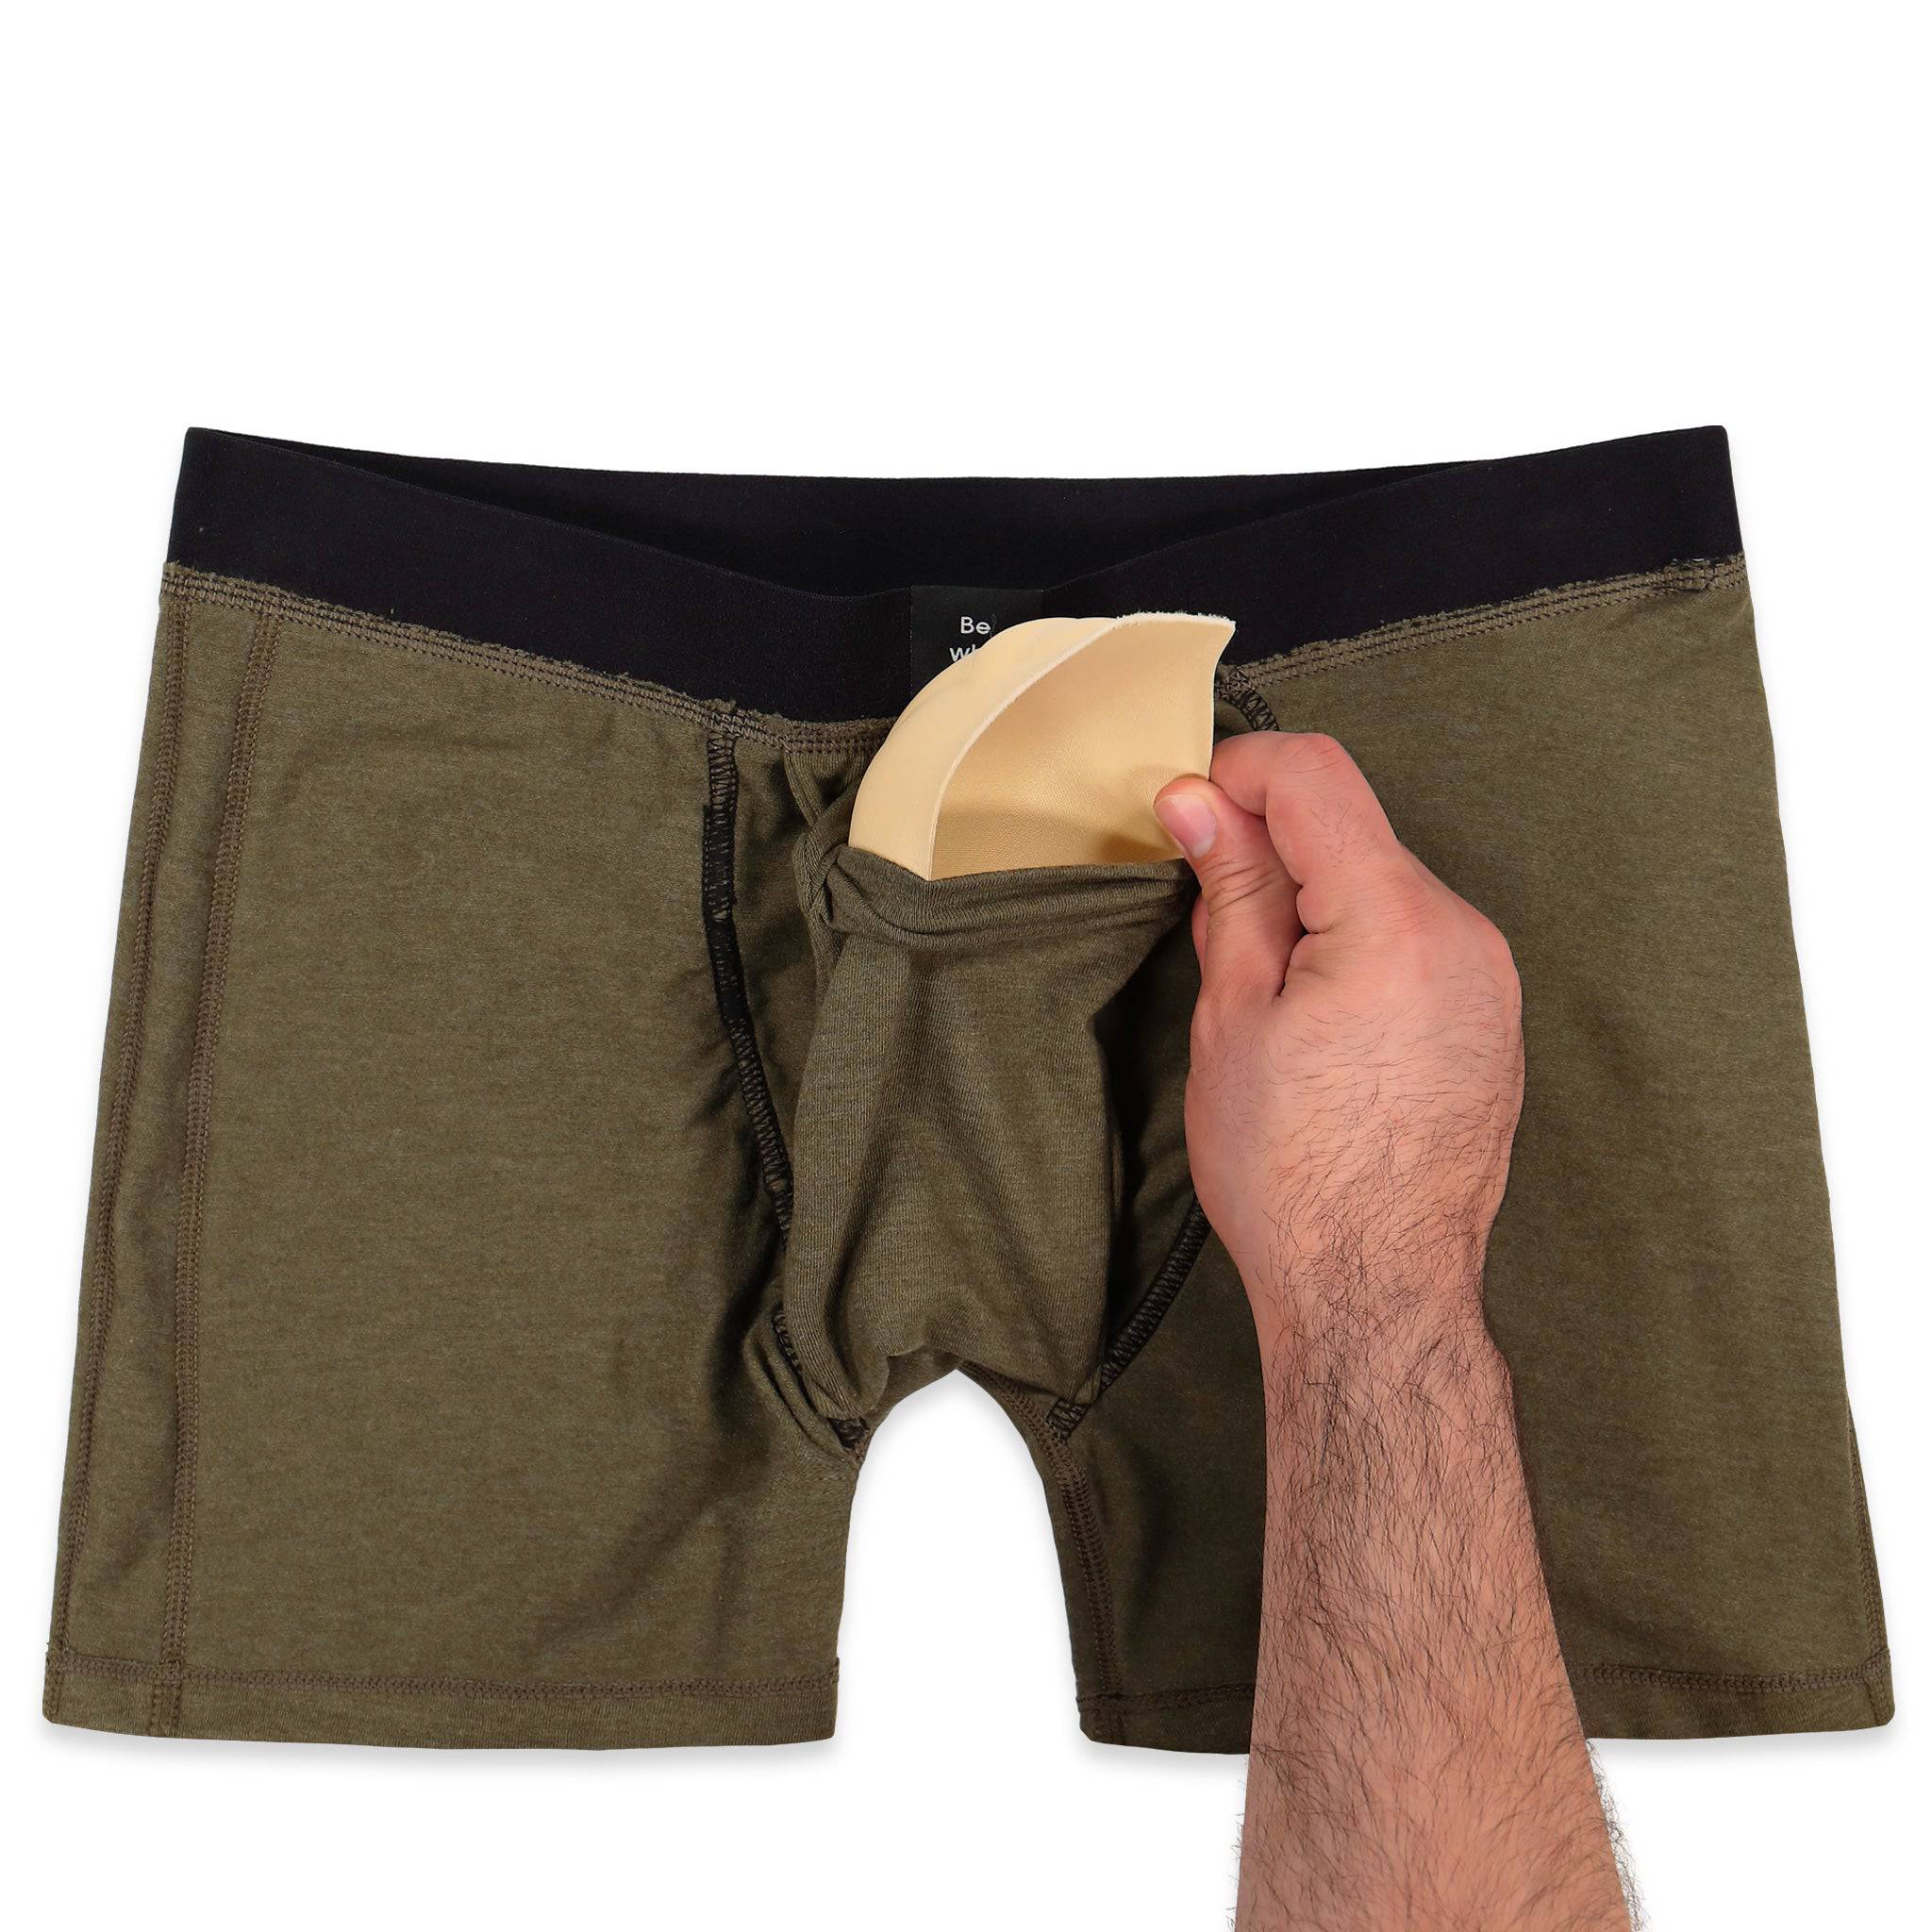 Button Fly Packer Boxer Underwear FTM Transgender (M = 33-35) - Import It  All